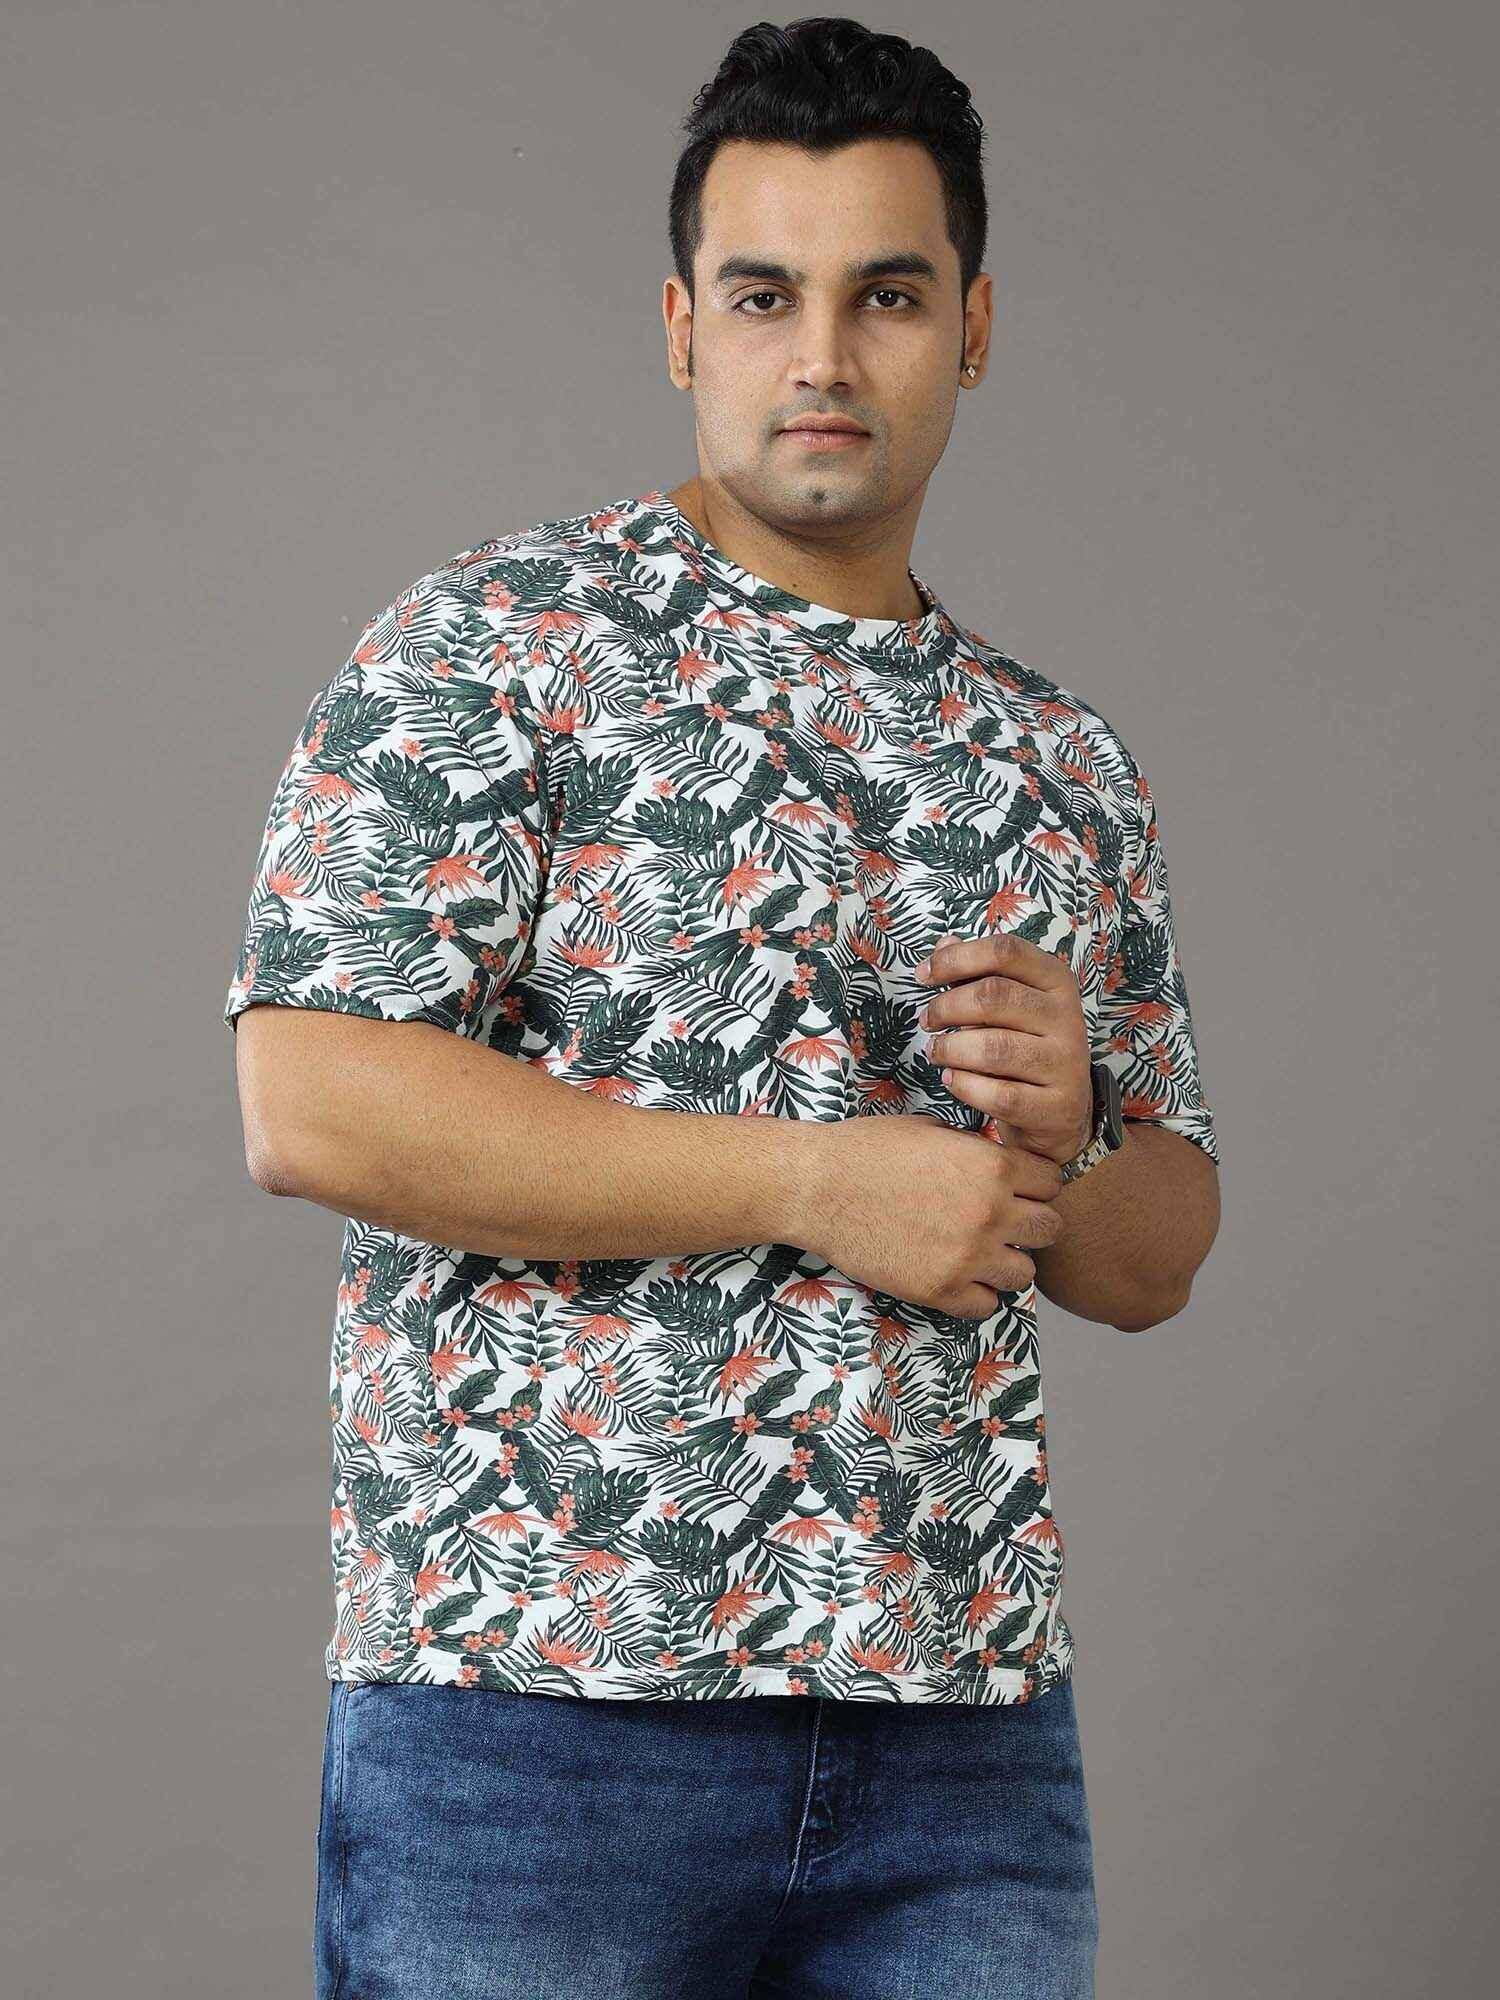 OAK Leaf Green Digital Printed Round Neck T-Shirt Men's Plus Size - Guniaa Fashions